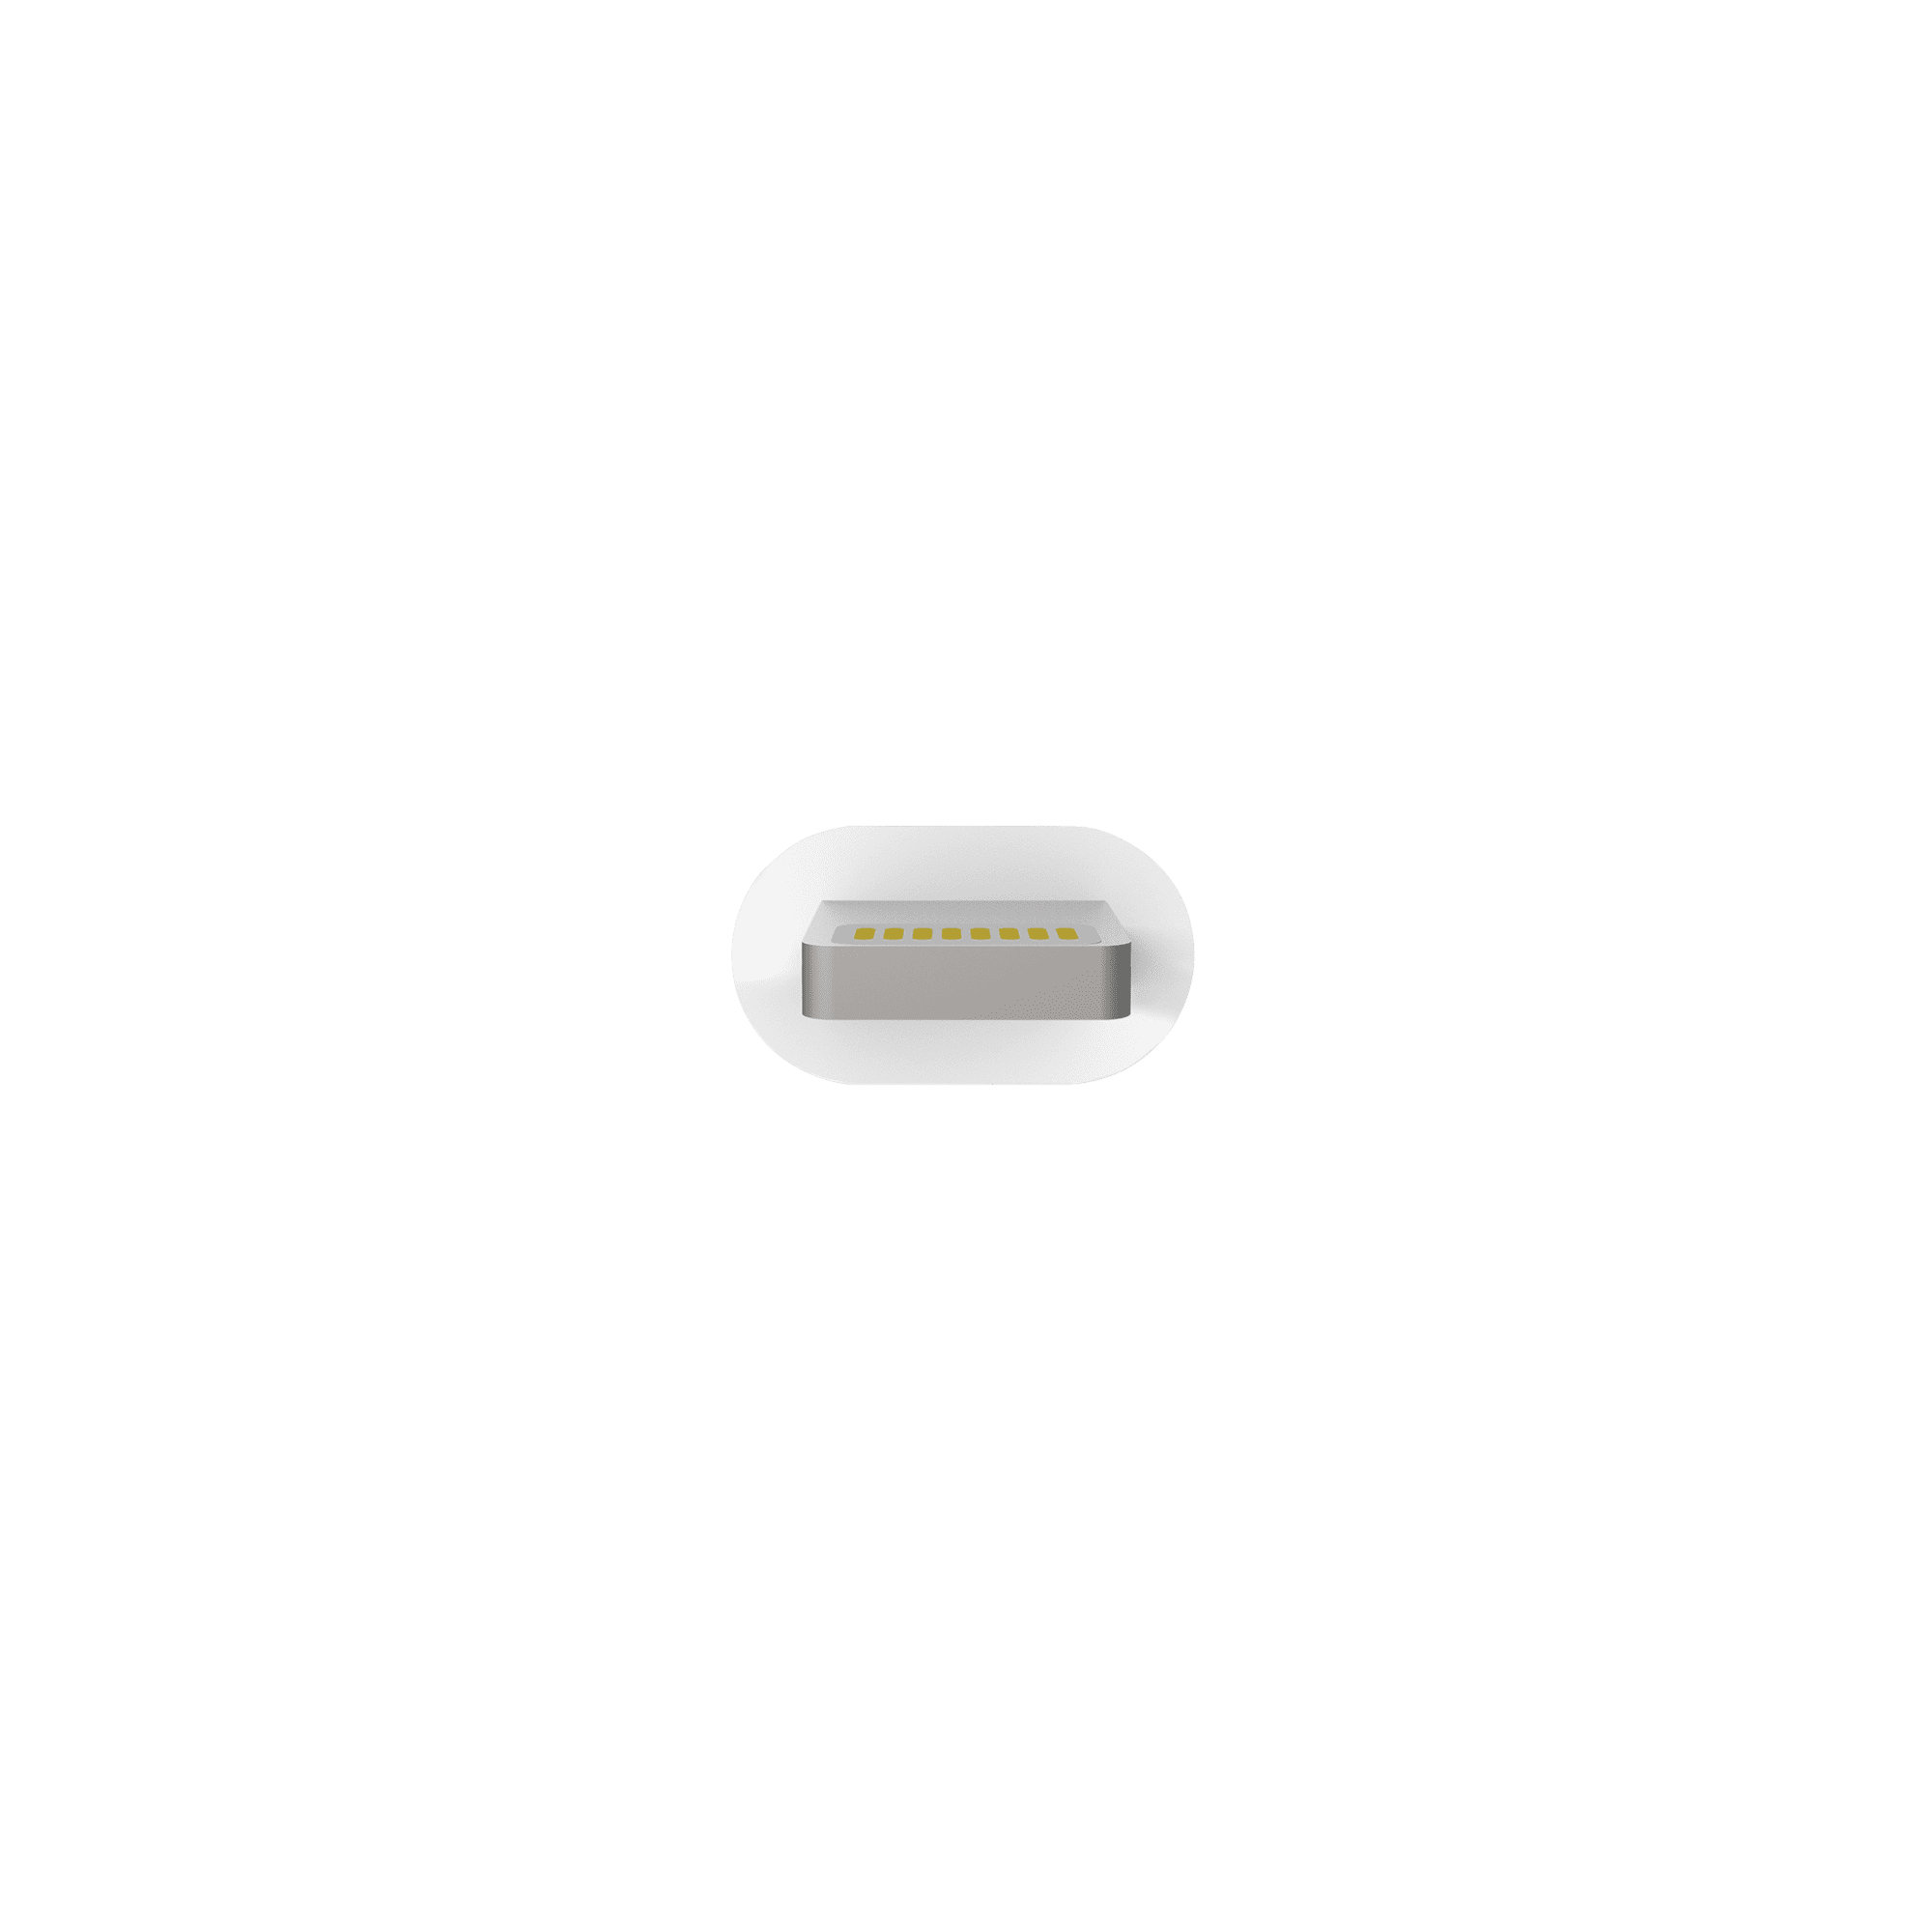 Cable, Weiß cm, 25 ARTWIZZ USB-A to Ladekabel, Lightning